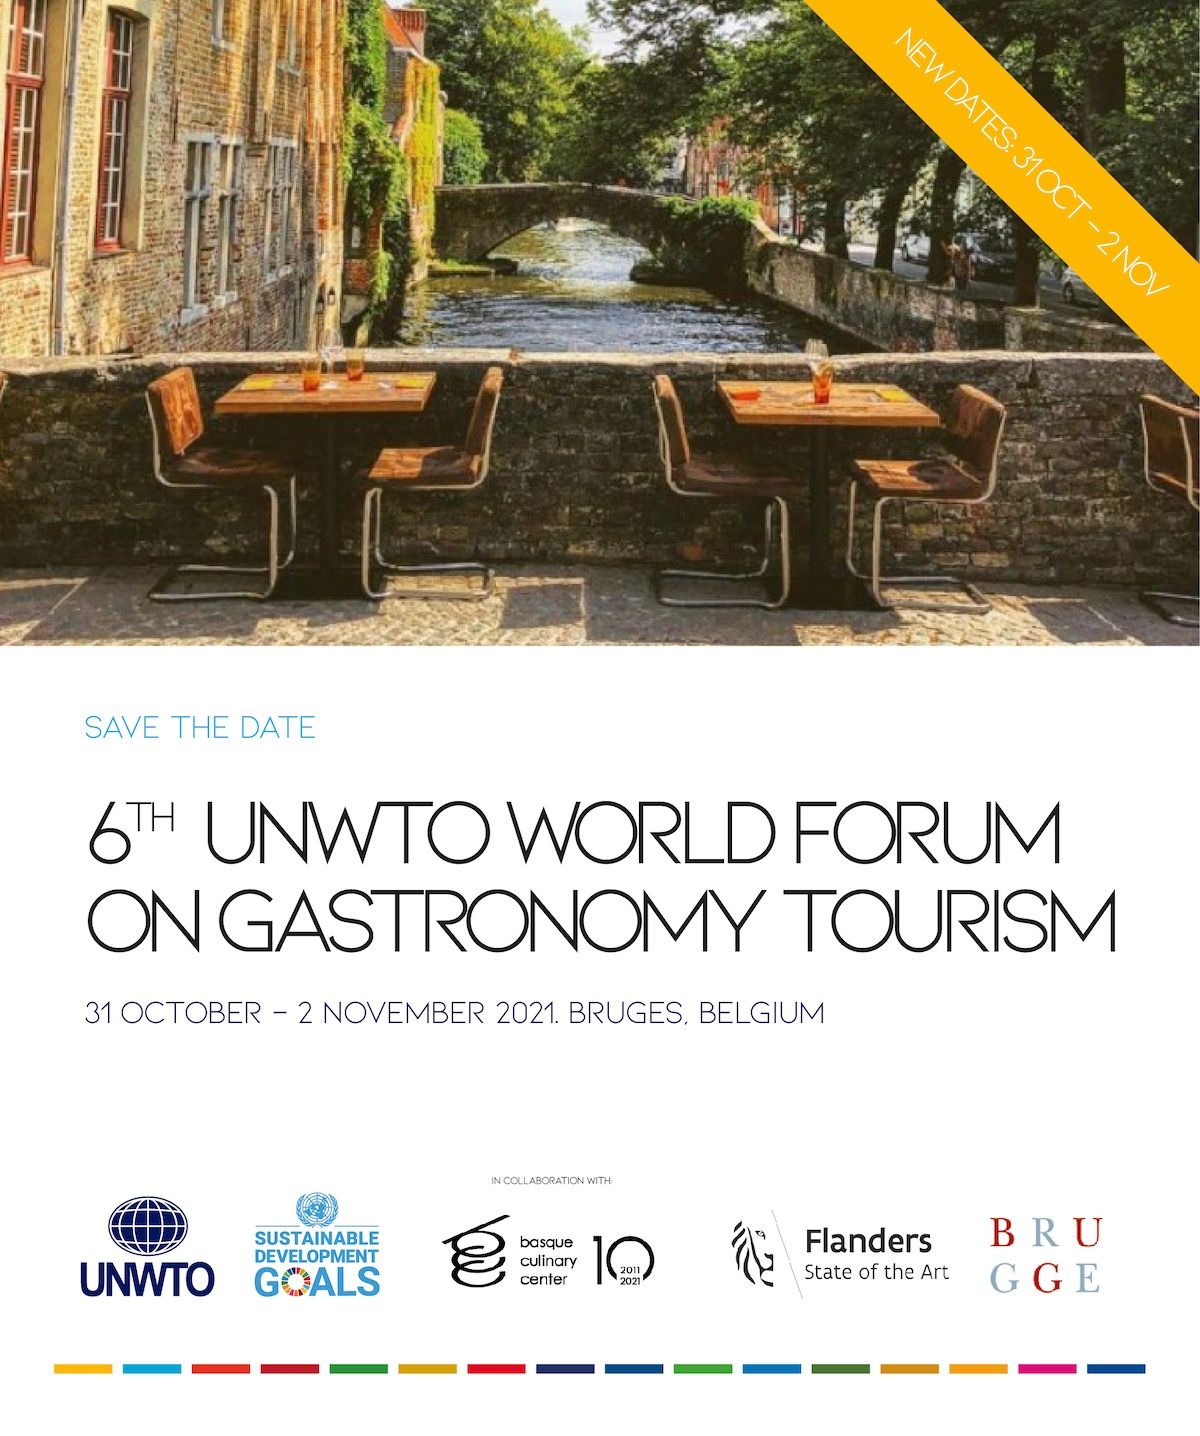 UNWTO World Forum on Gastronomy Tourism
